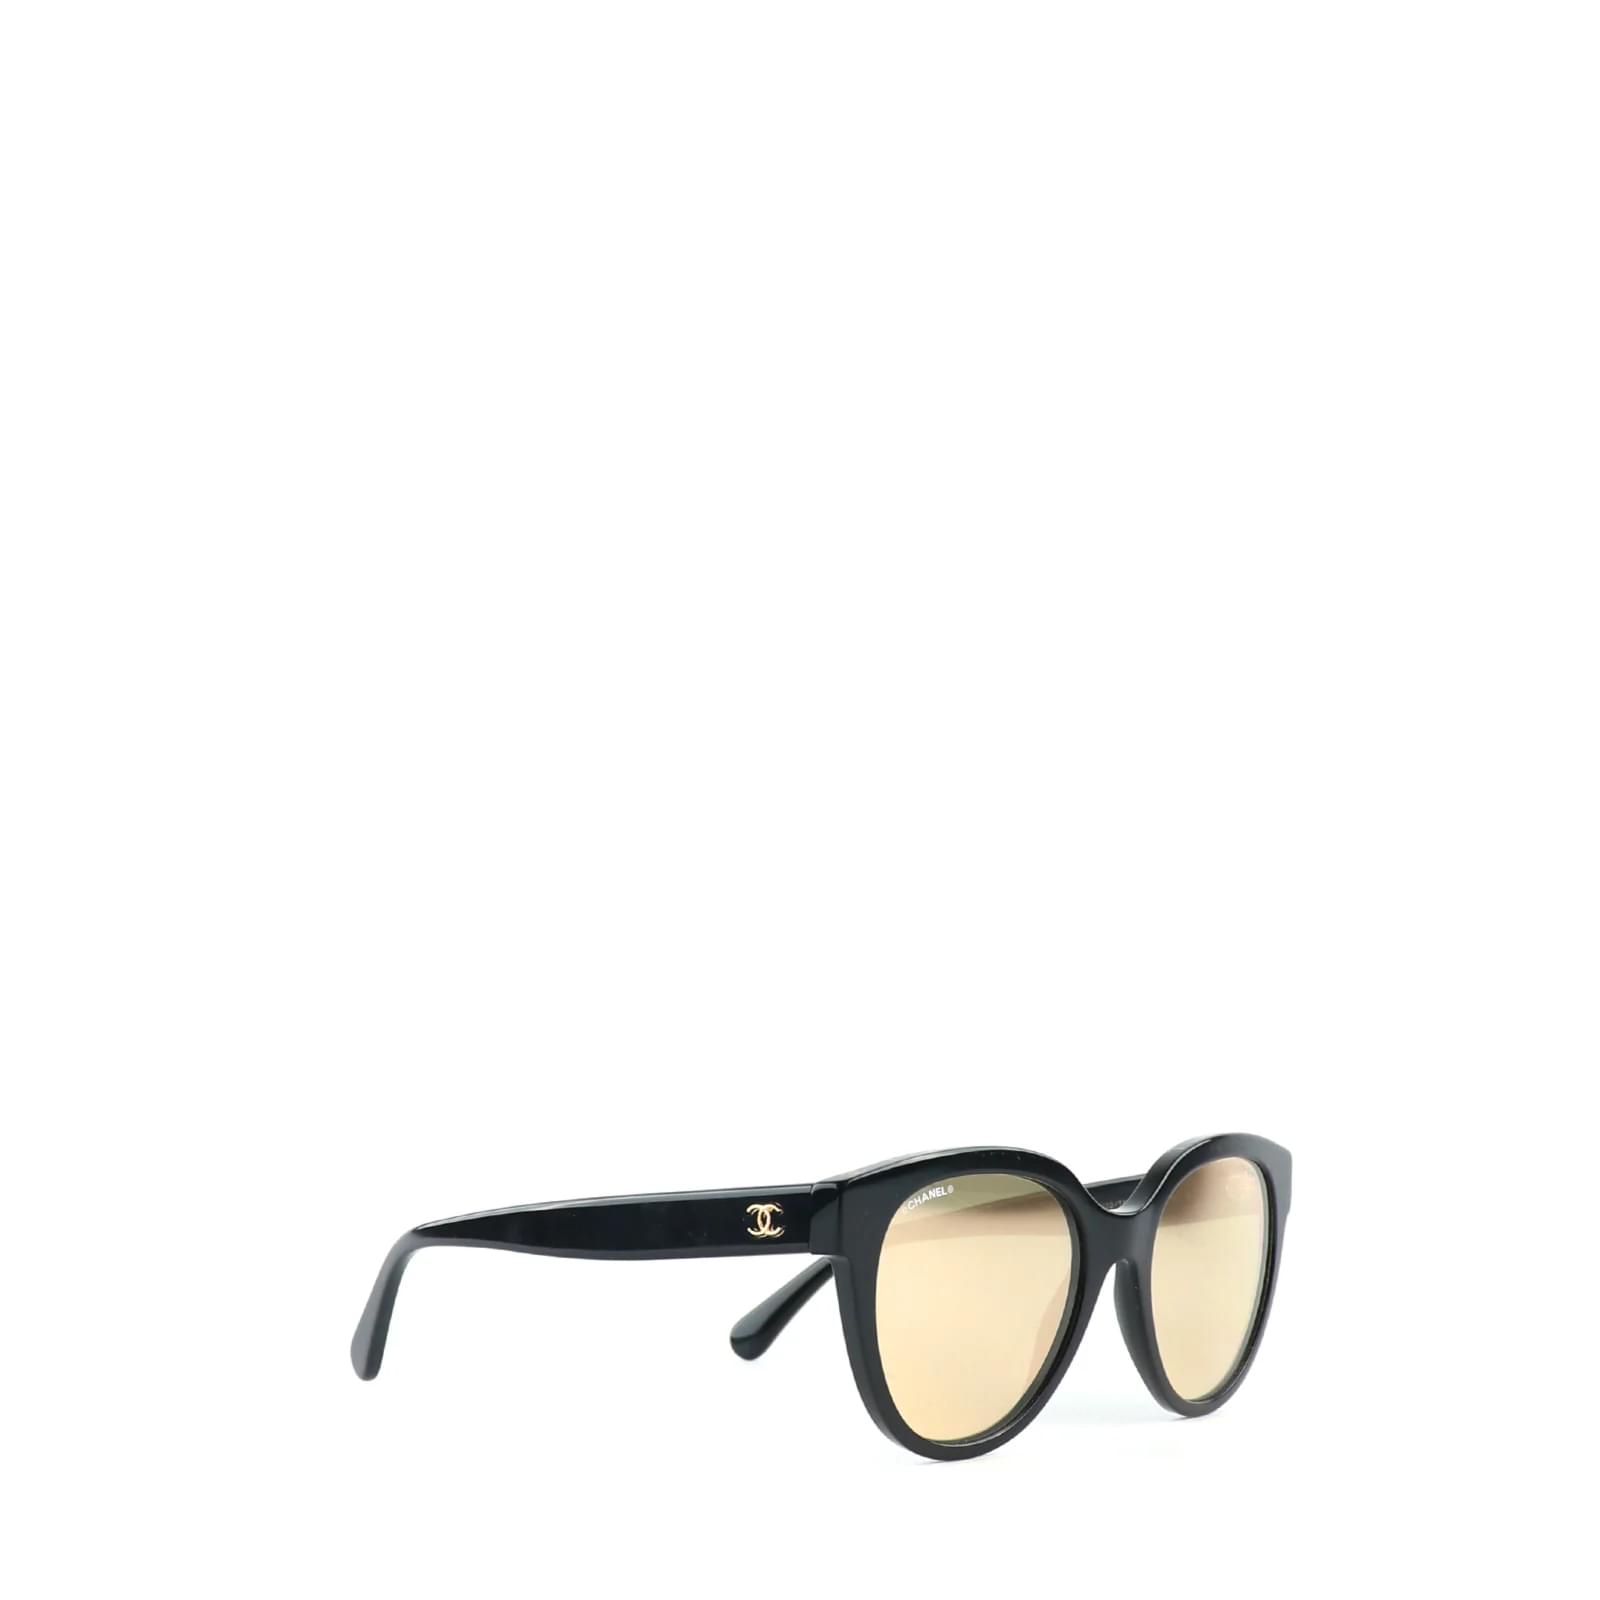 Chanel Chanel vintage sunglasses